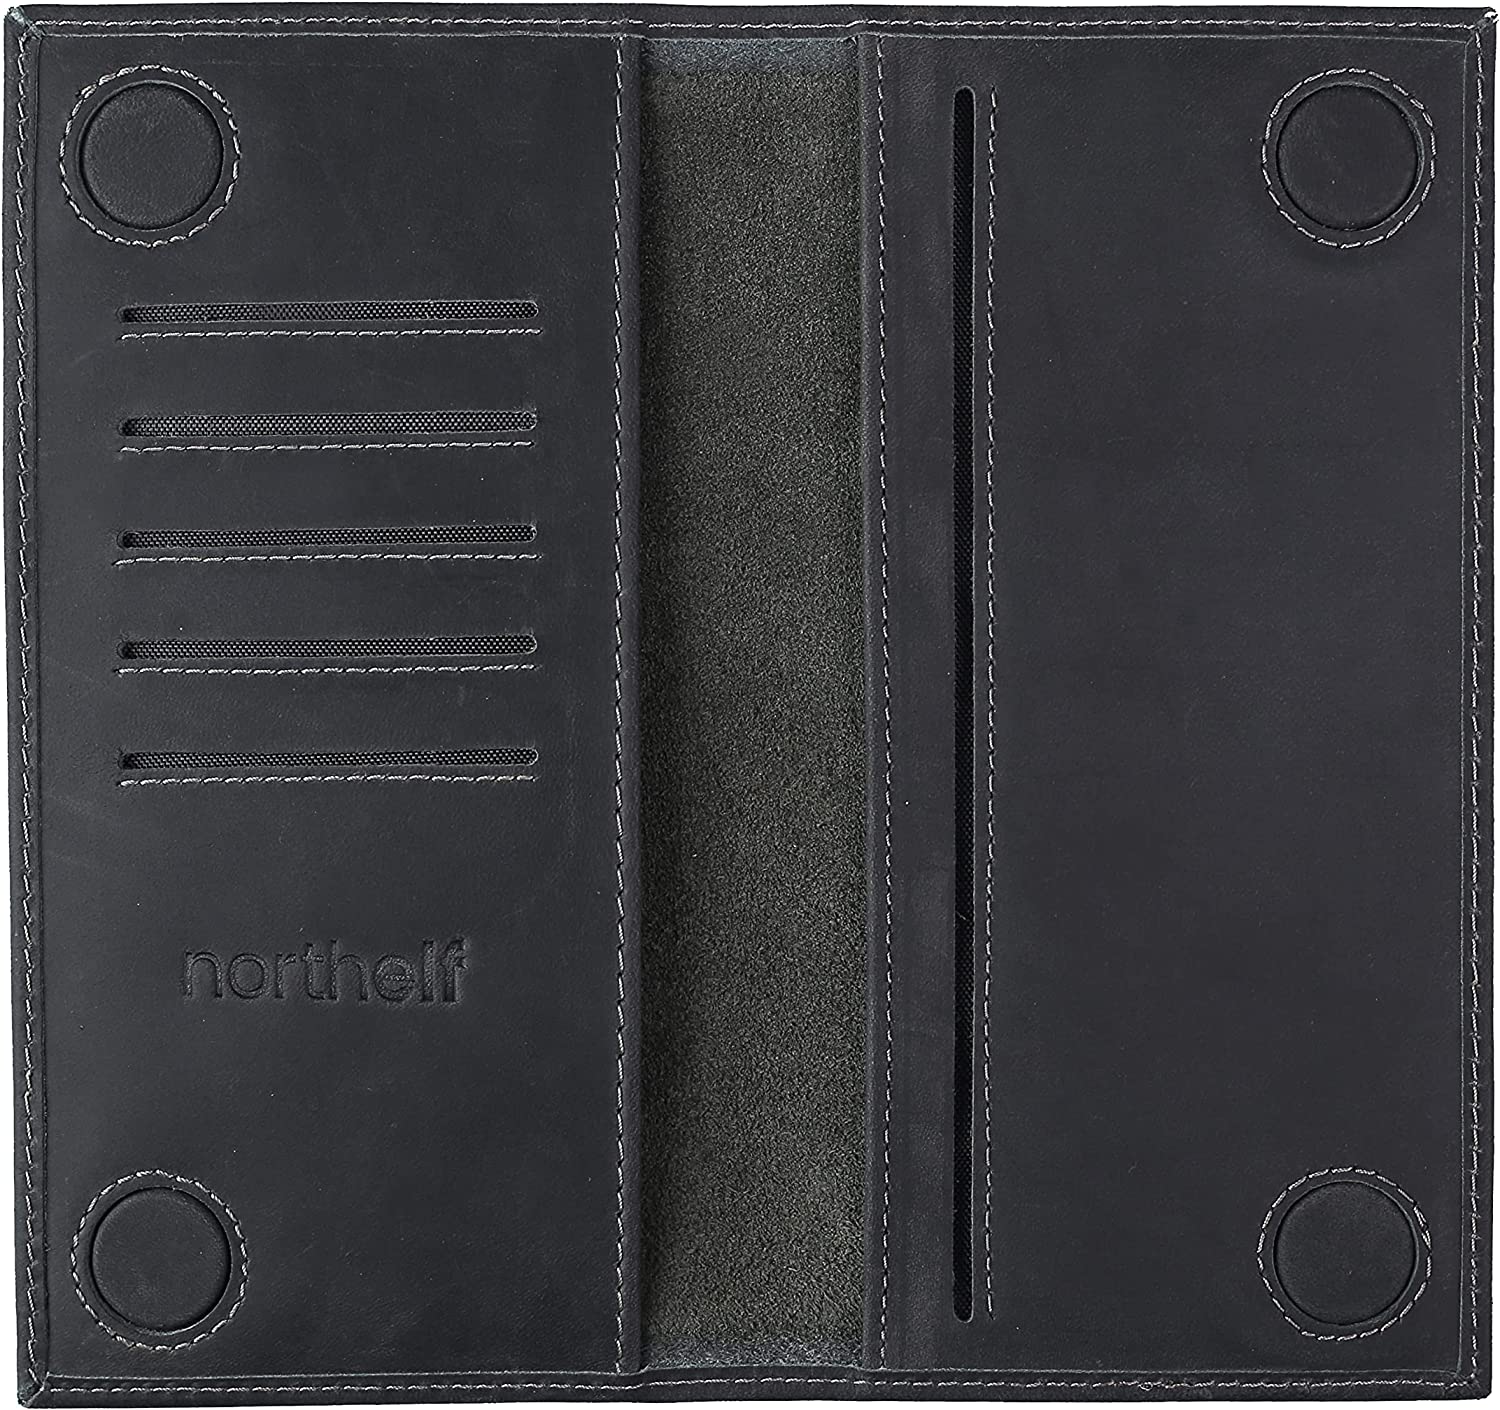 northelf Unisex Multipocket Leather Wallet Lightweight Bifold Wallet Card Holder Genuine Cow Leather Wallet Purse